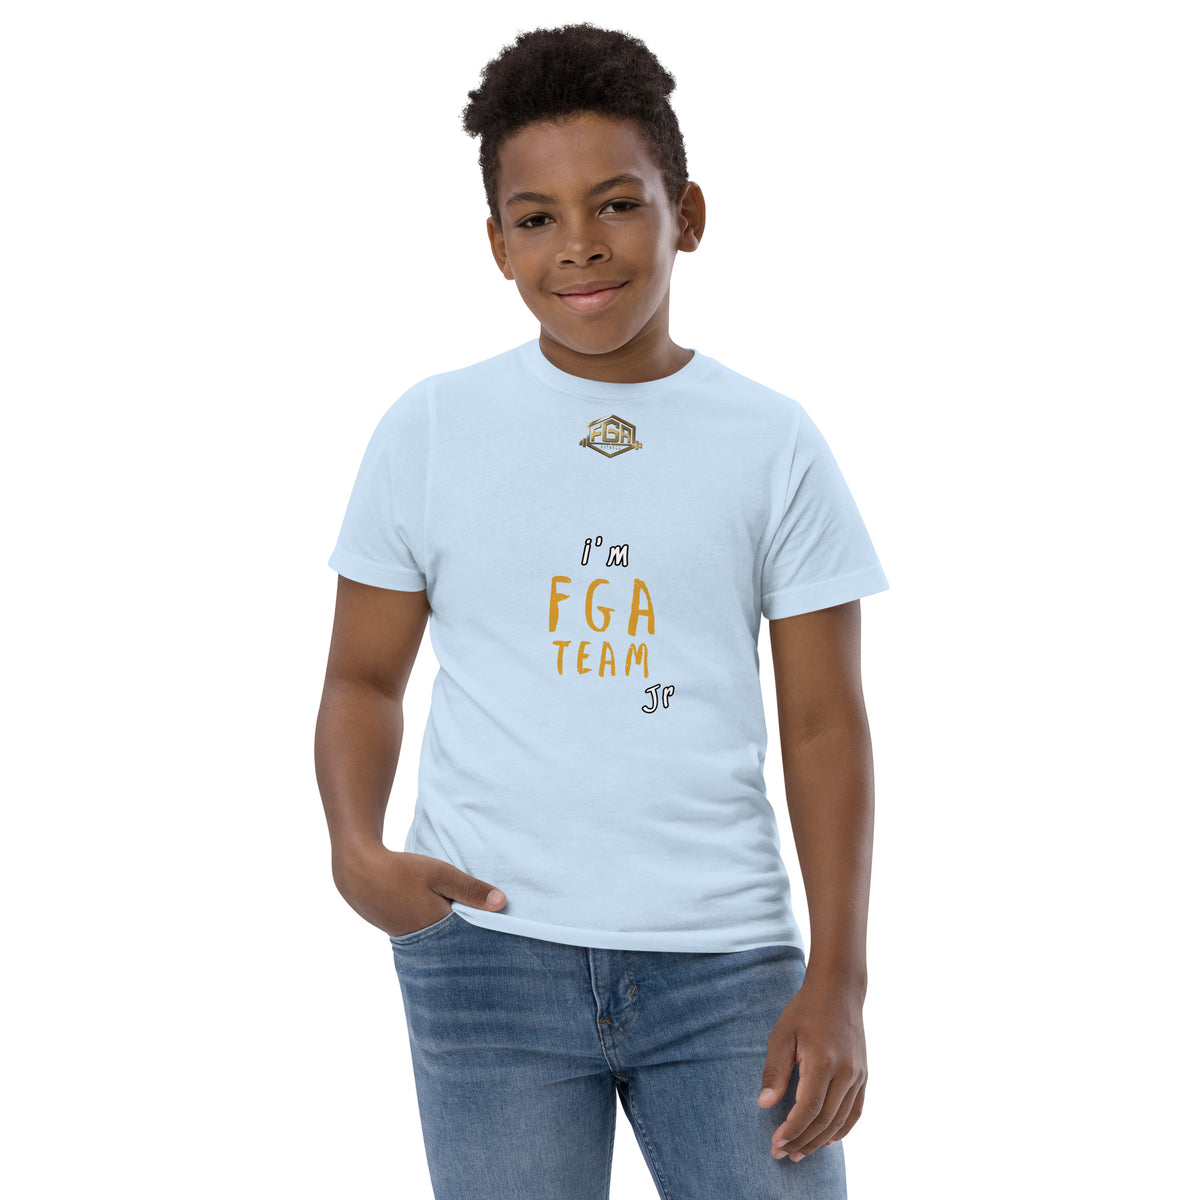 Playera para Niño  - " I'm FGA TEAM Jr."